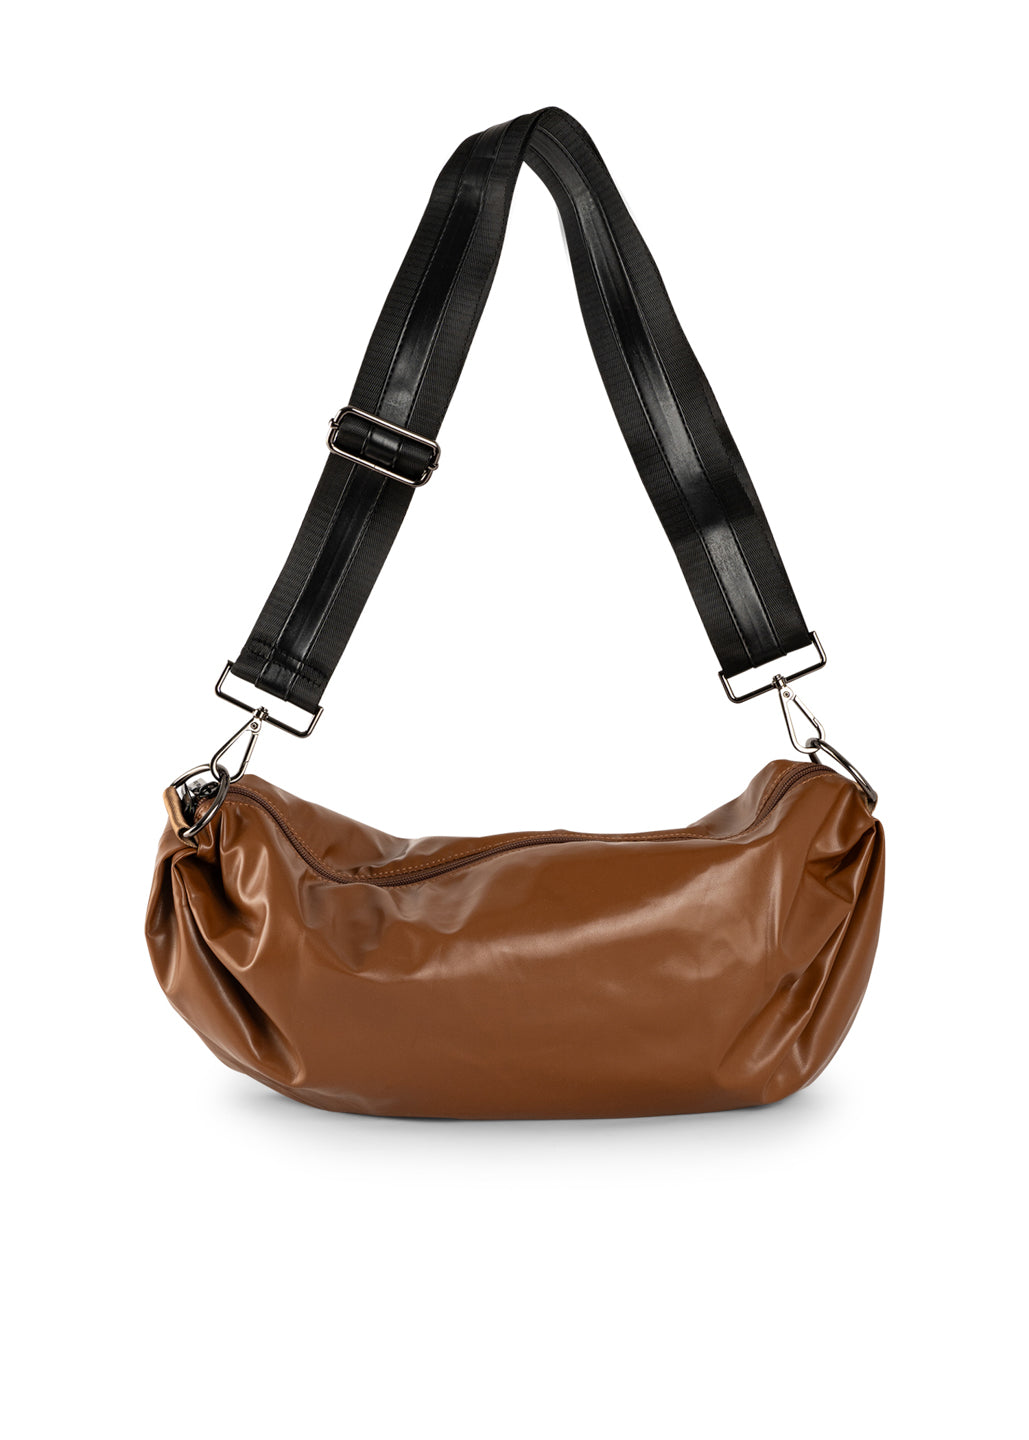 WILDHORN Stylish Leather Women Handbag I Shoulder Hobo Bag Purse With